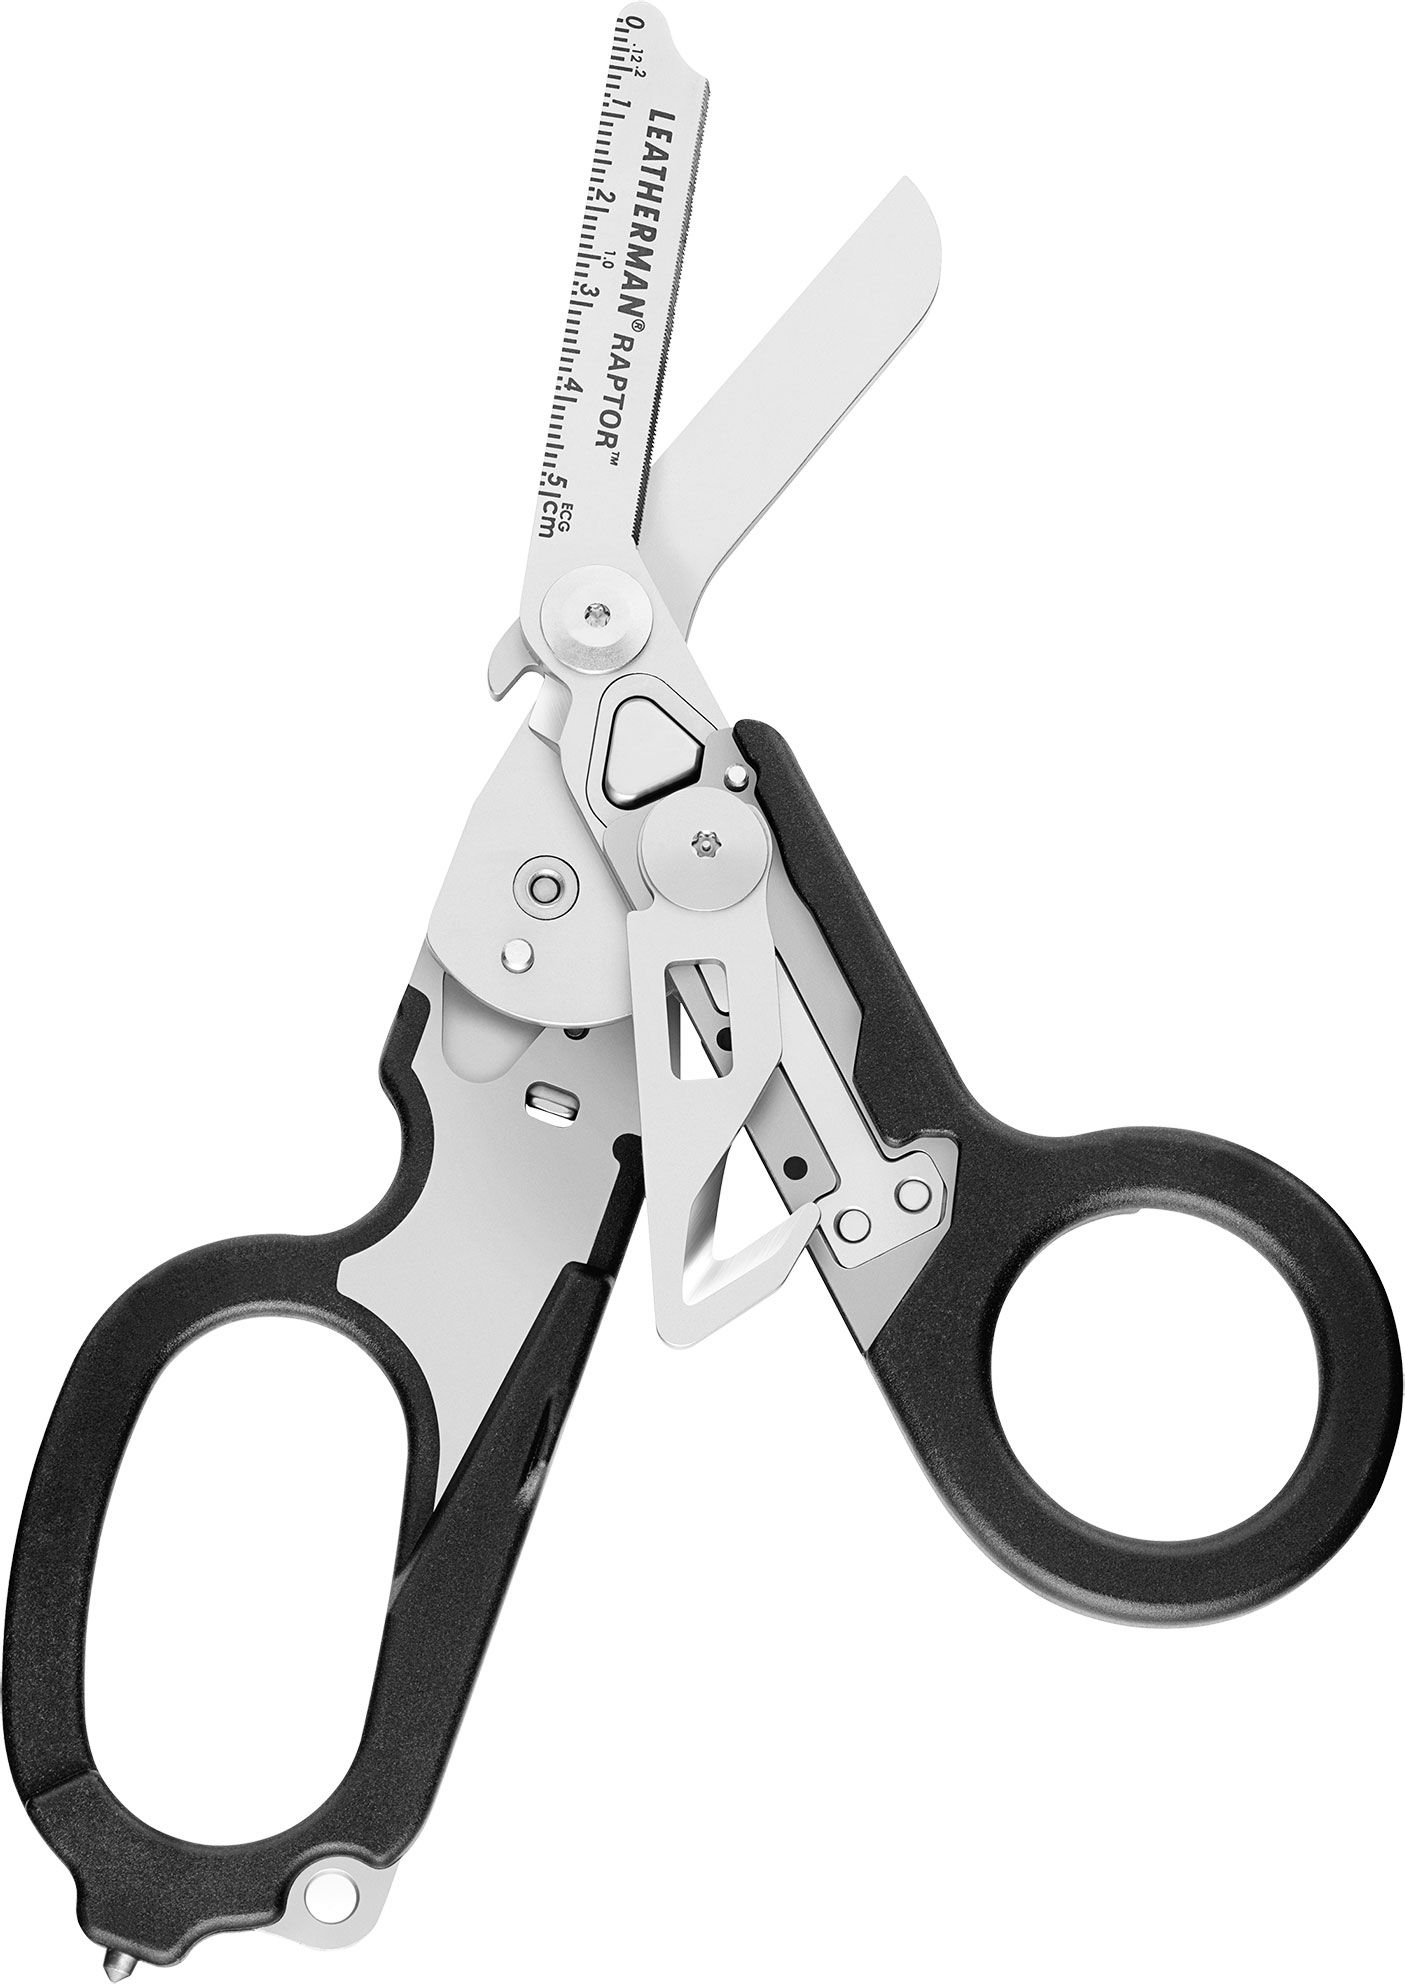 Mini Trauma Shear Scissors / Multiple Sizes / Badge Reel Accessories 